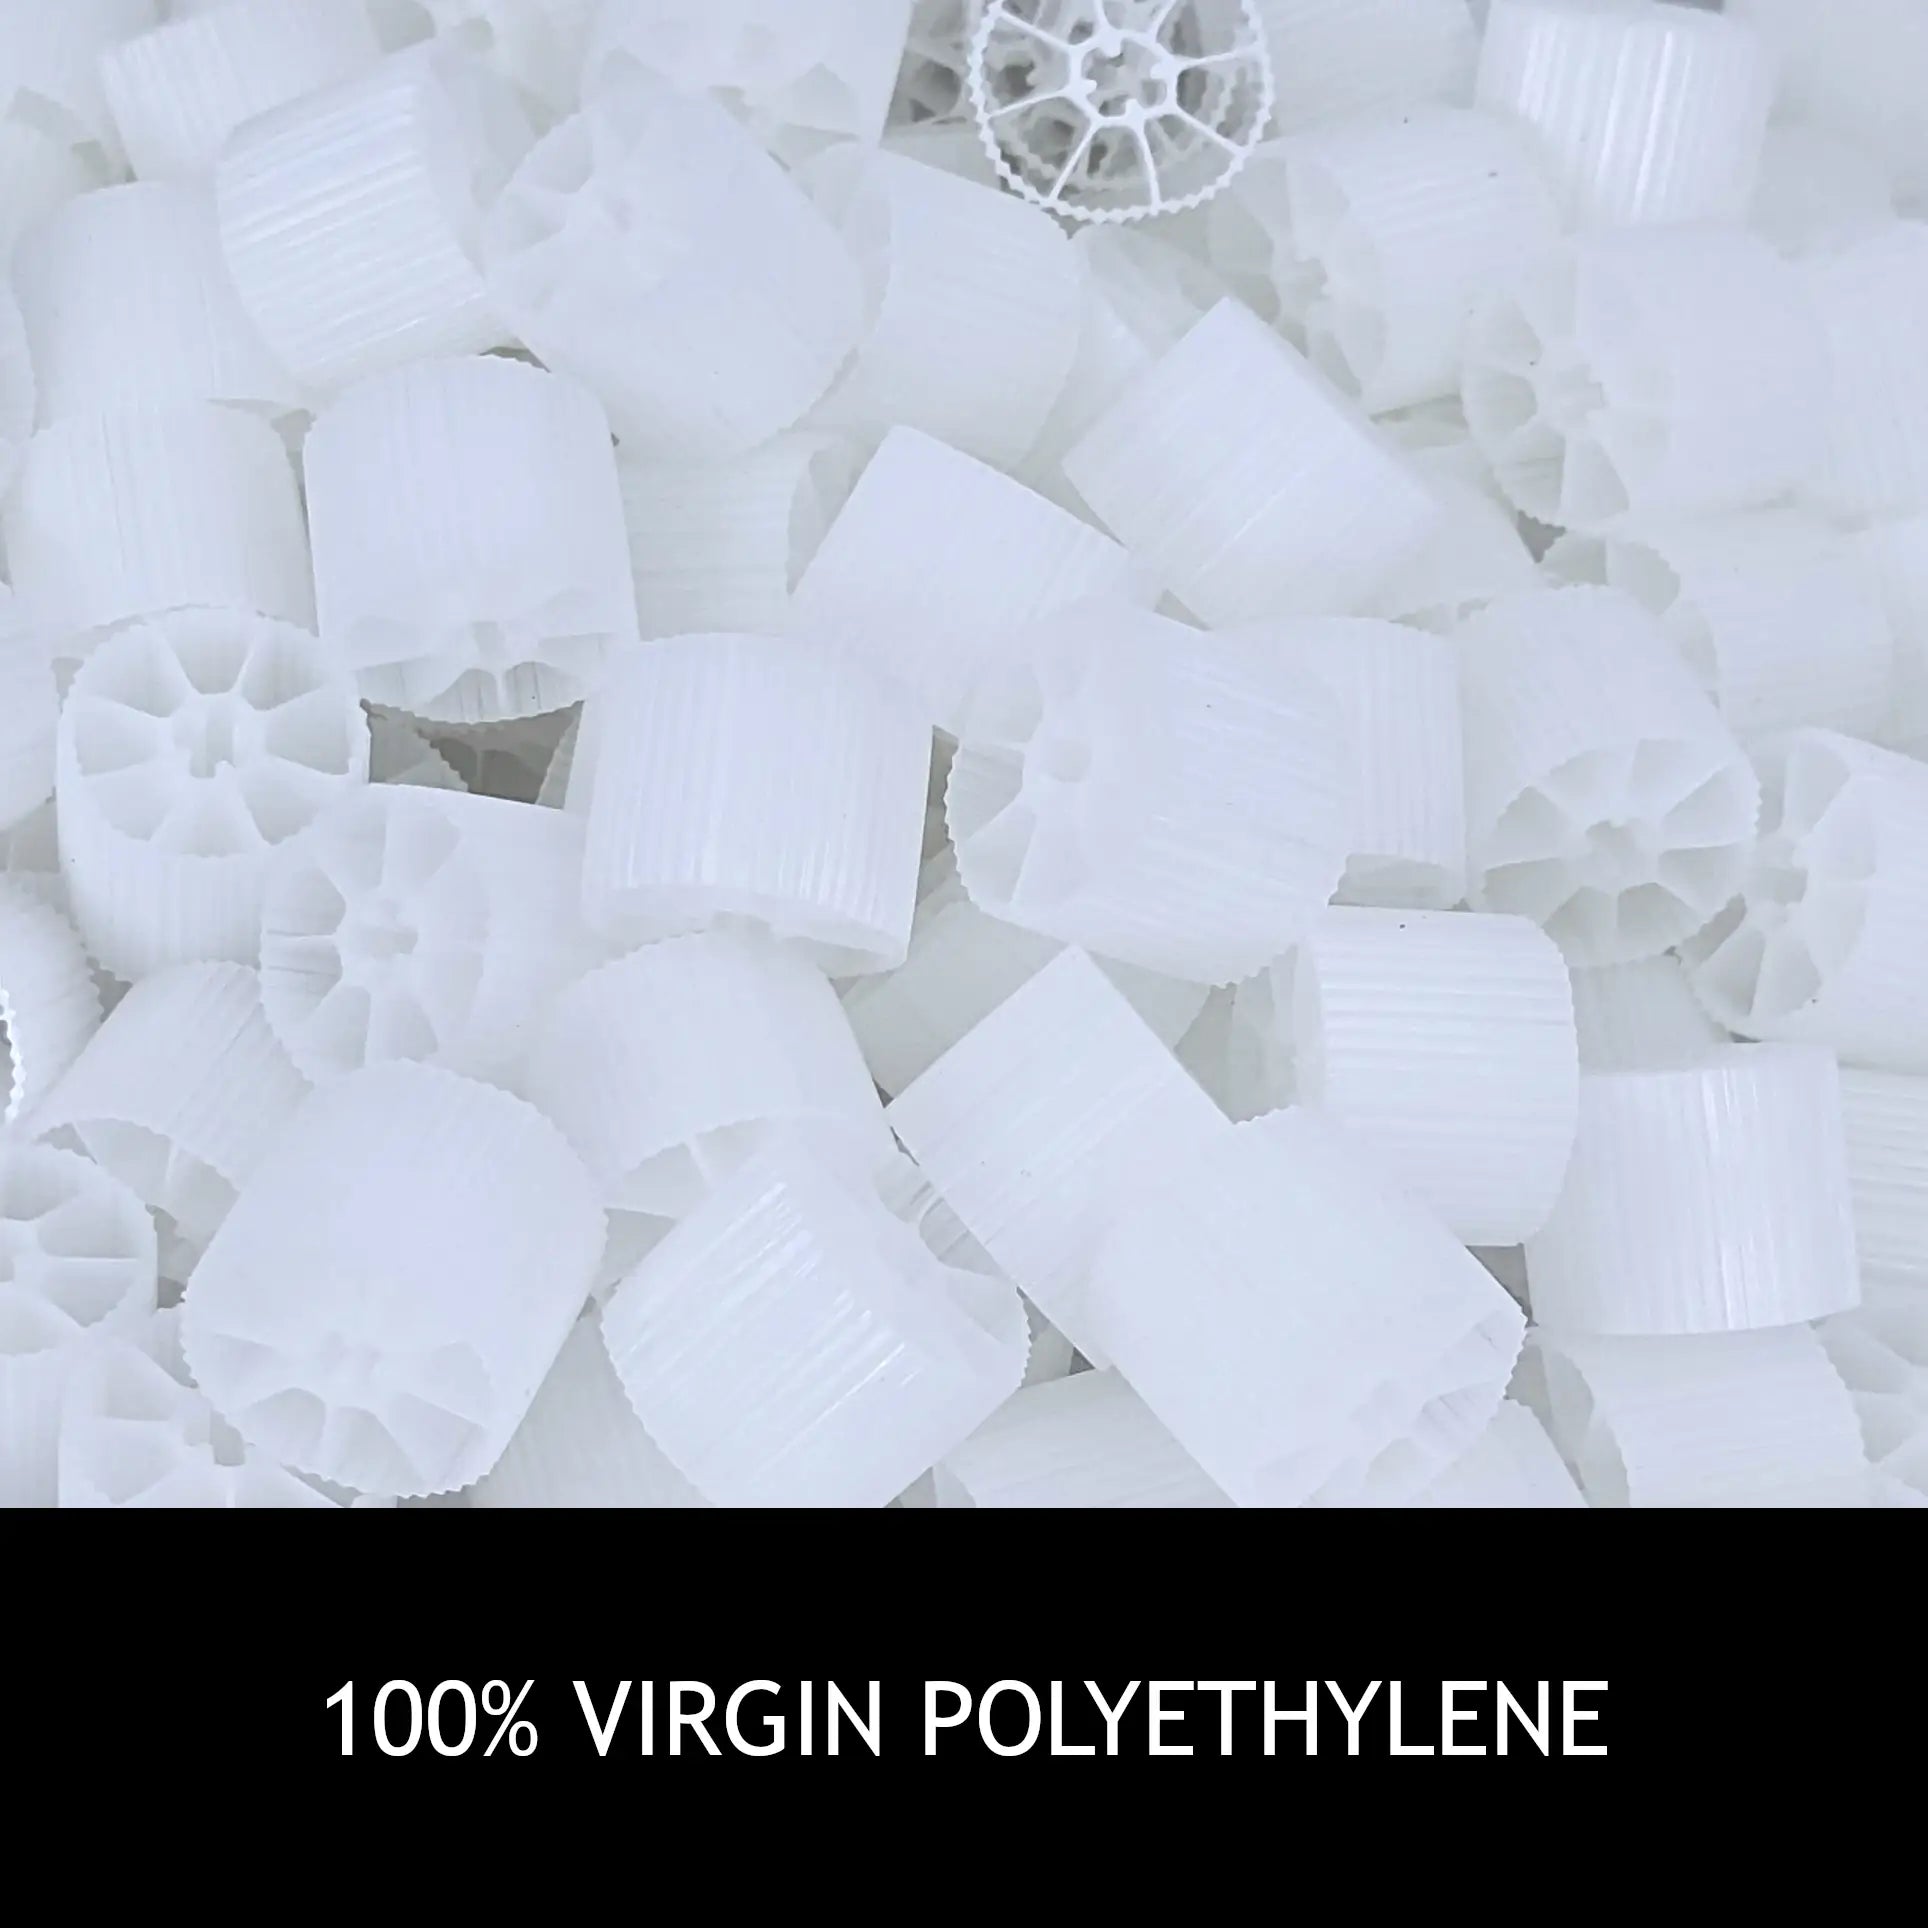 KoiMaster Moving Bed Bio Media - 100% Virgin Polyethylene